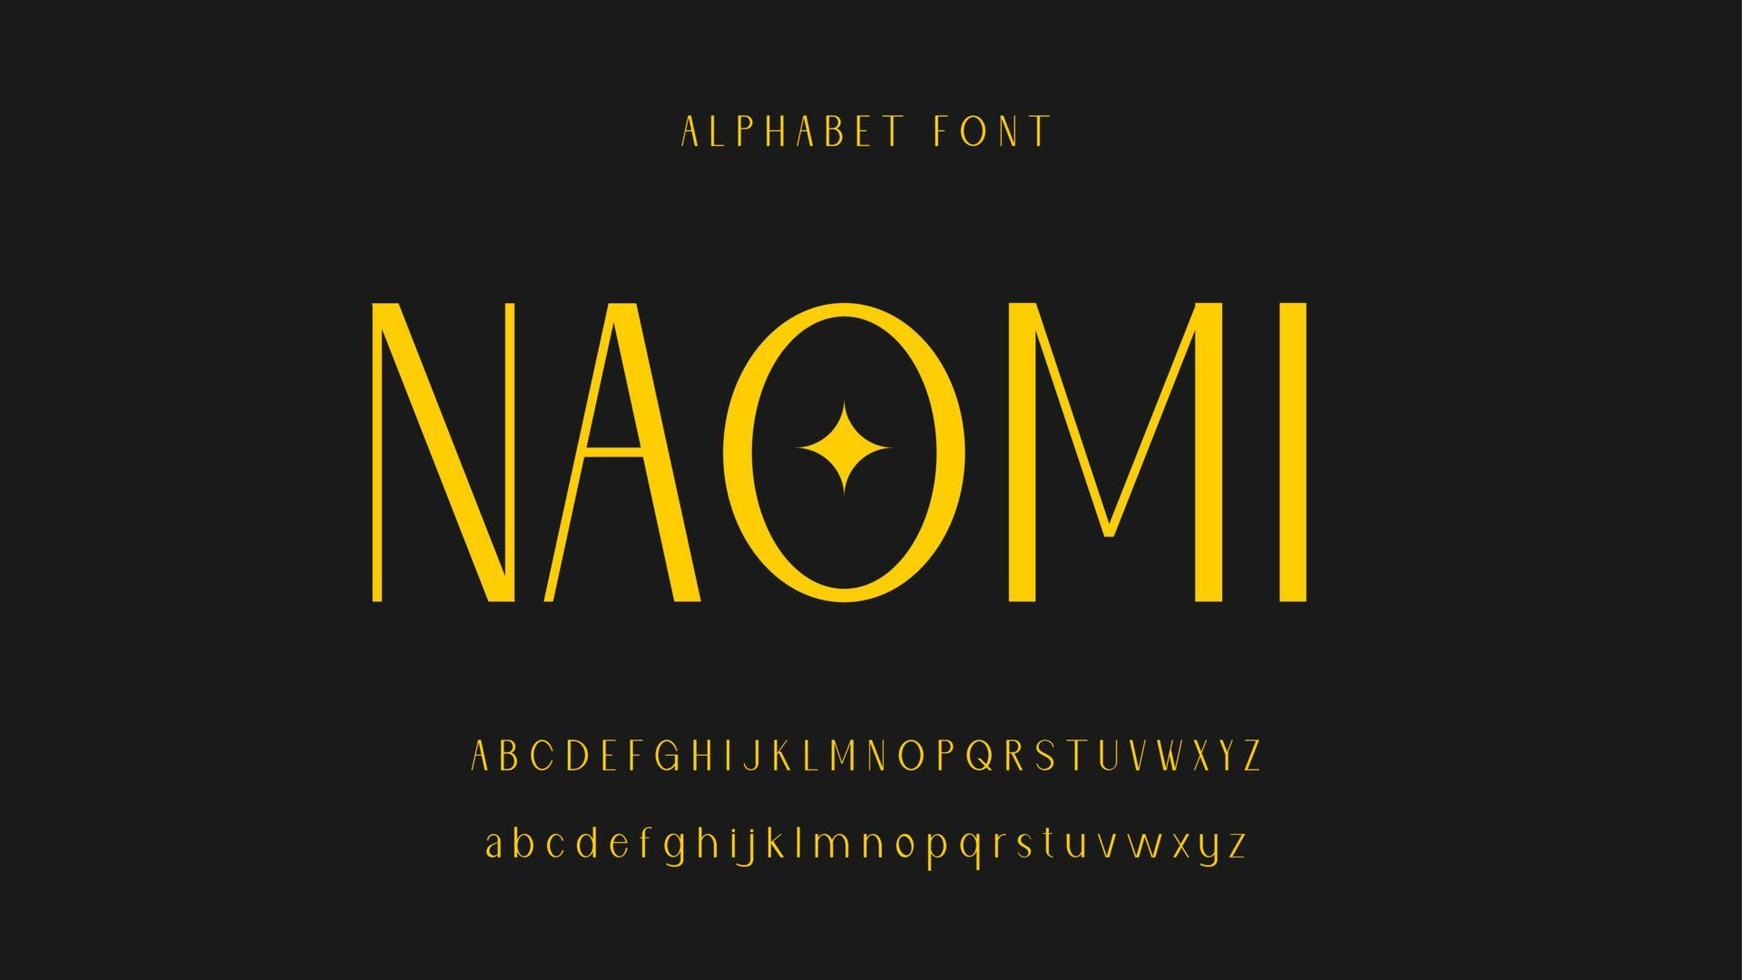 eleganta alfabetet teckensnitt. lyx typografi modernt sans serif teckensnitt vektor